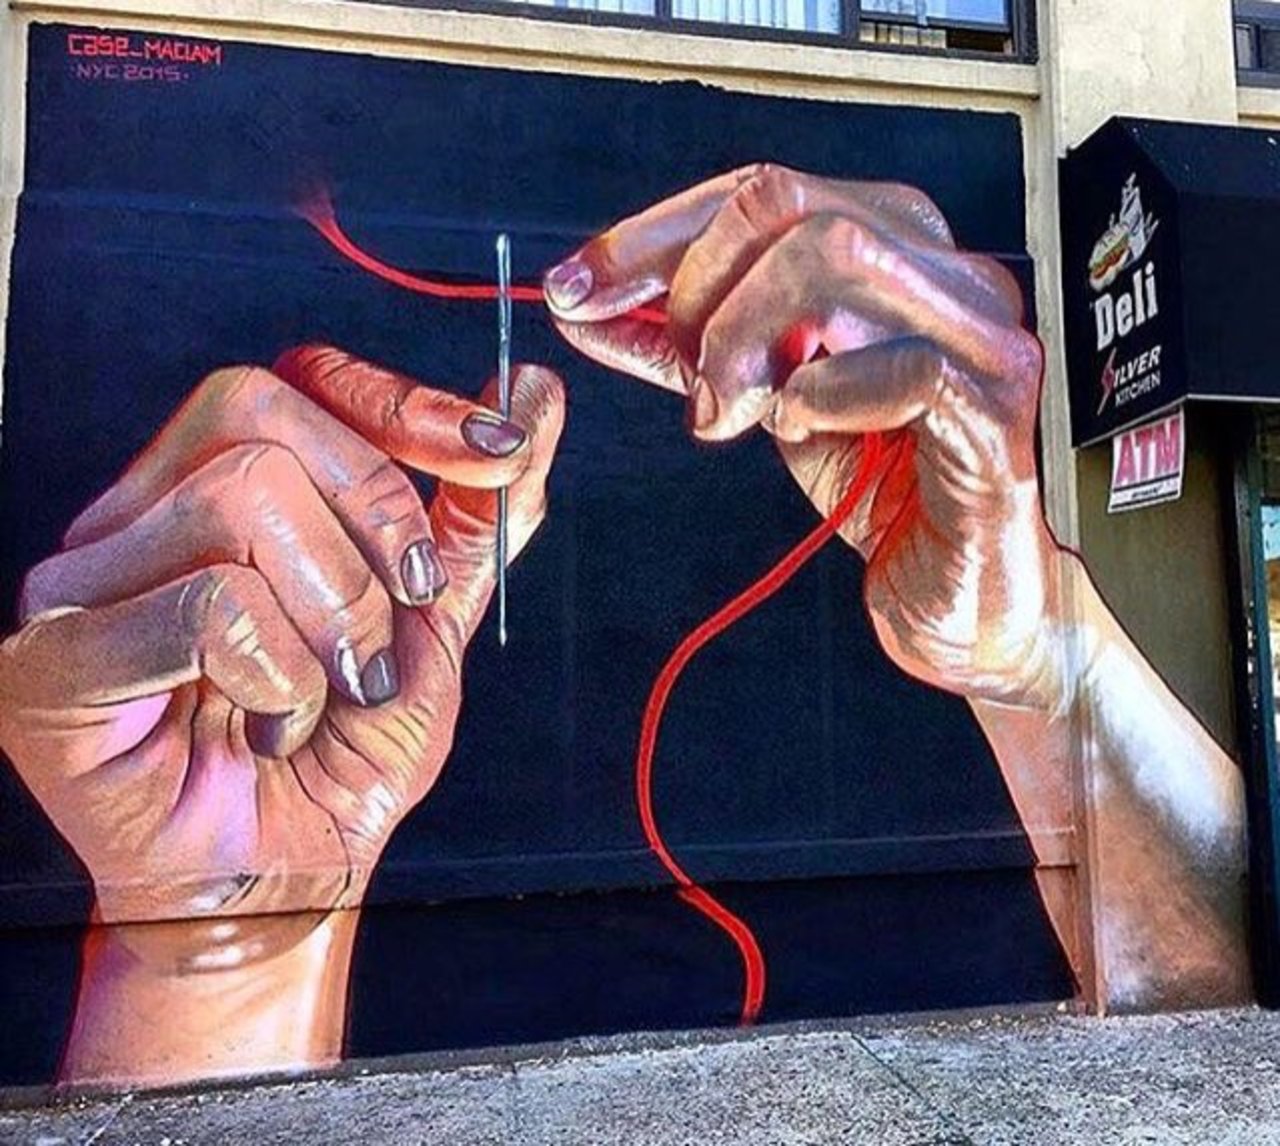 New Street Art by Case Ma'Claim in NYC 

#art #graffiti #mural #streetart https://t.co/yIvEpGG7M2